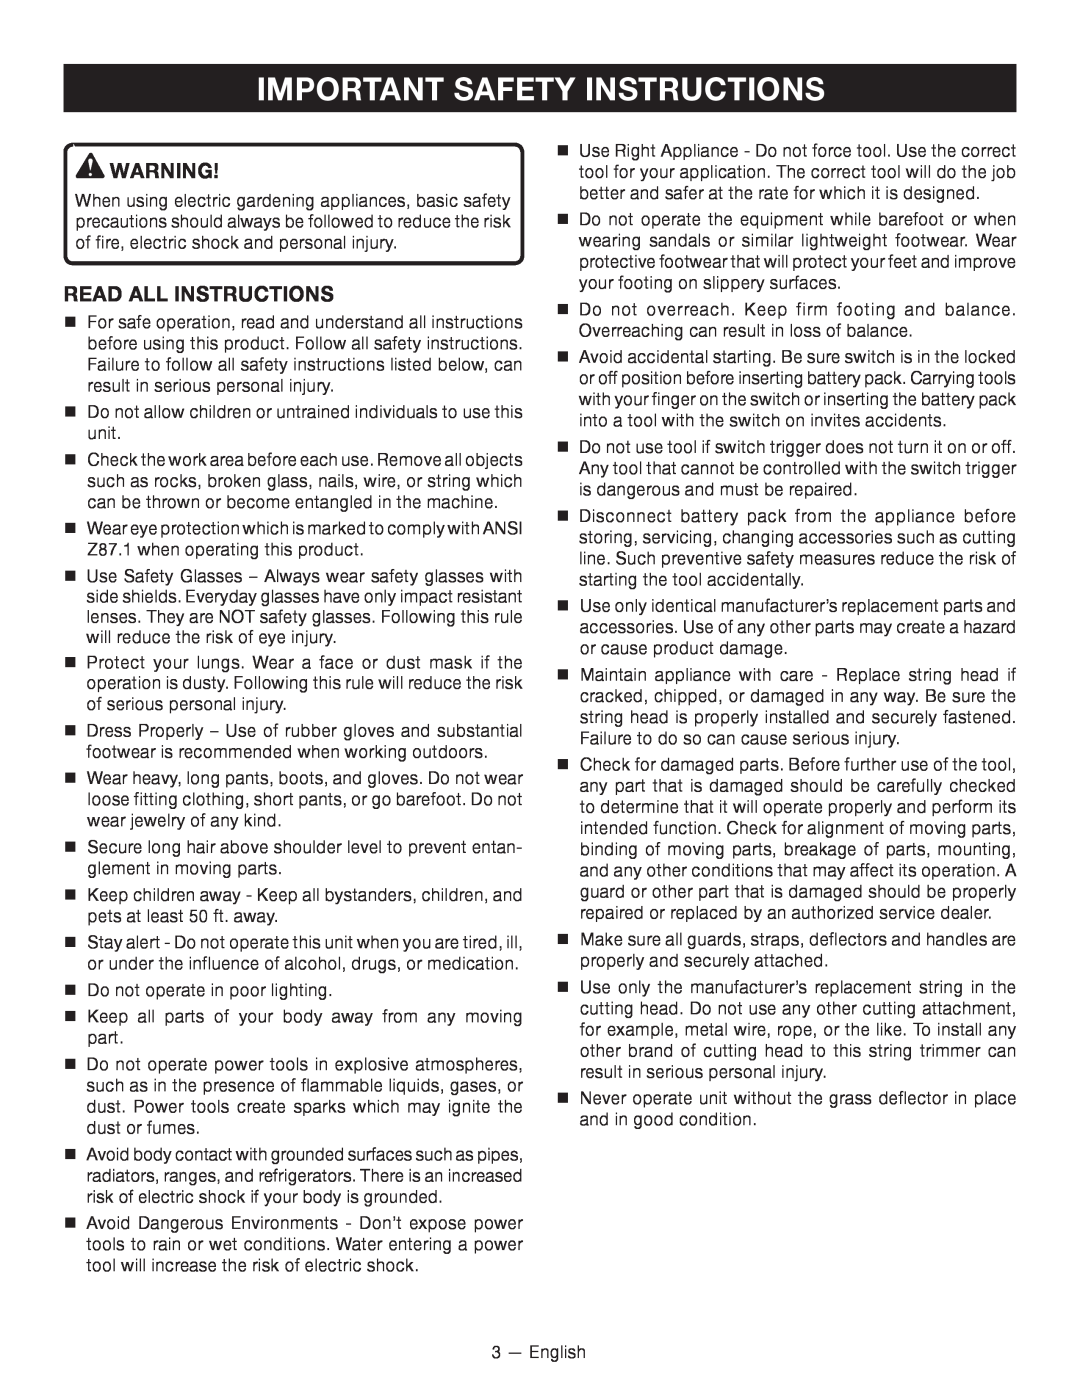 Ryobi P2000 manuel dutilisation Important Safety Instructions, read all instructions 